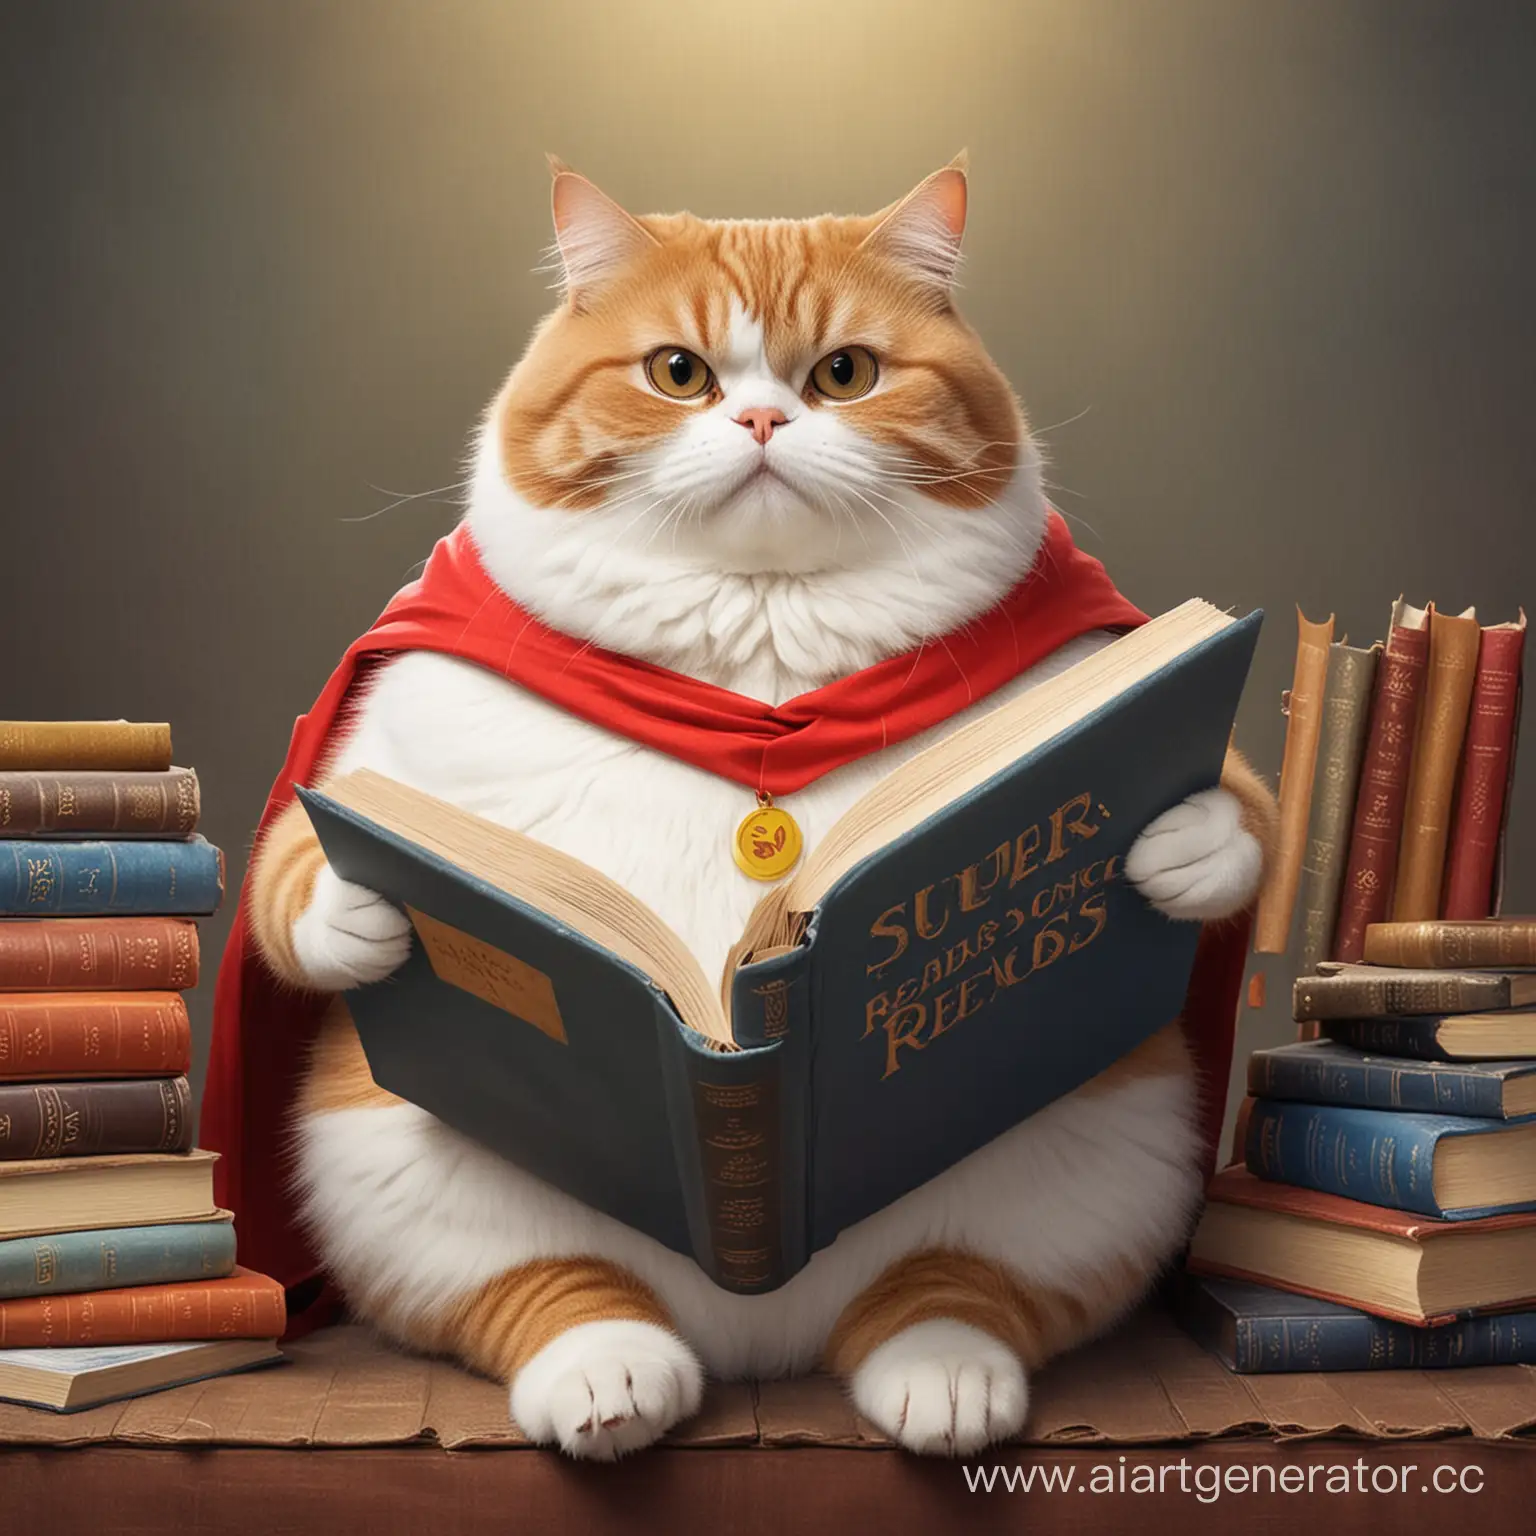 Cuddly-Feline-Enthusiast-Enjoys-Literary-Adventure